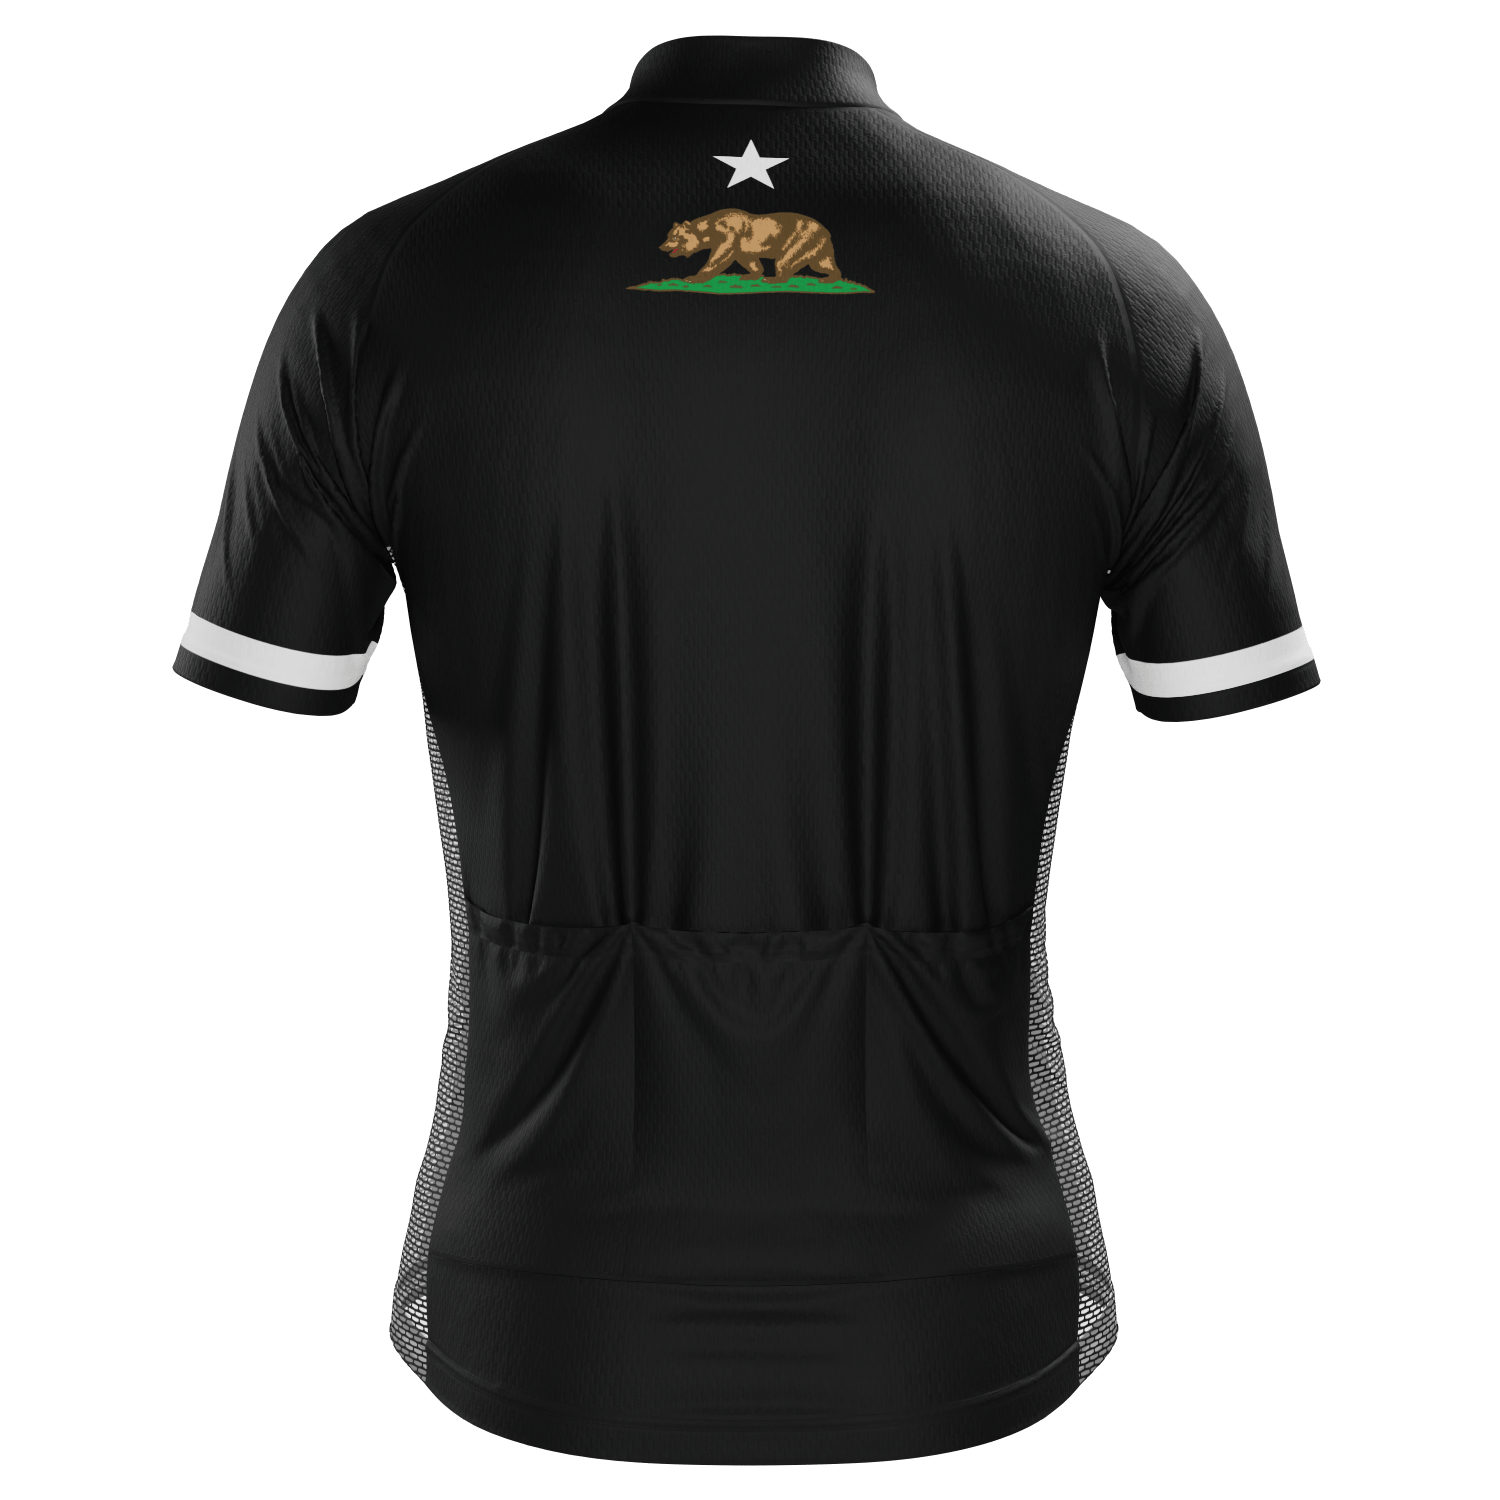 Men's California Republic Series 1 Short Sleeve Cycling Jersey